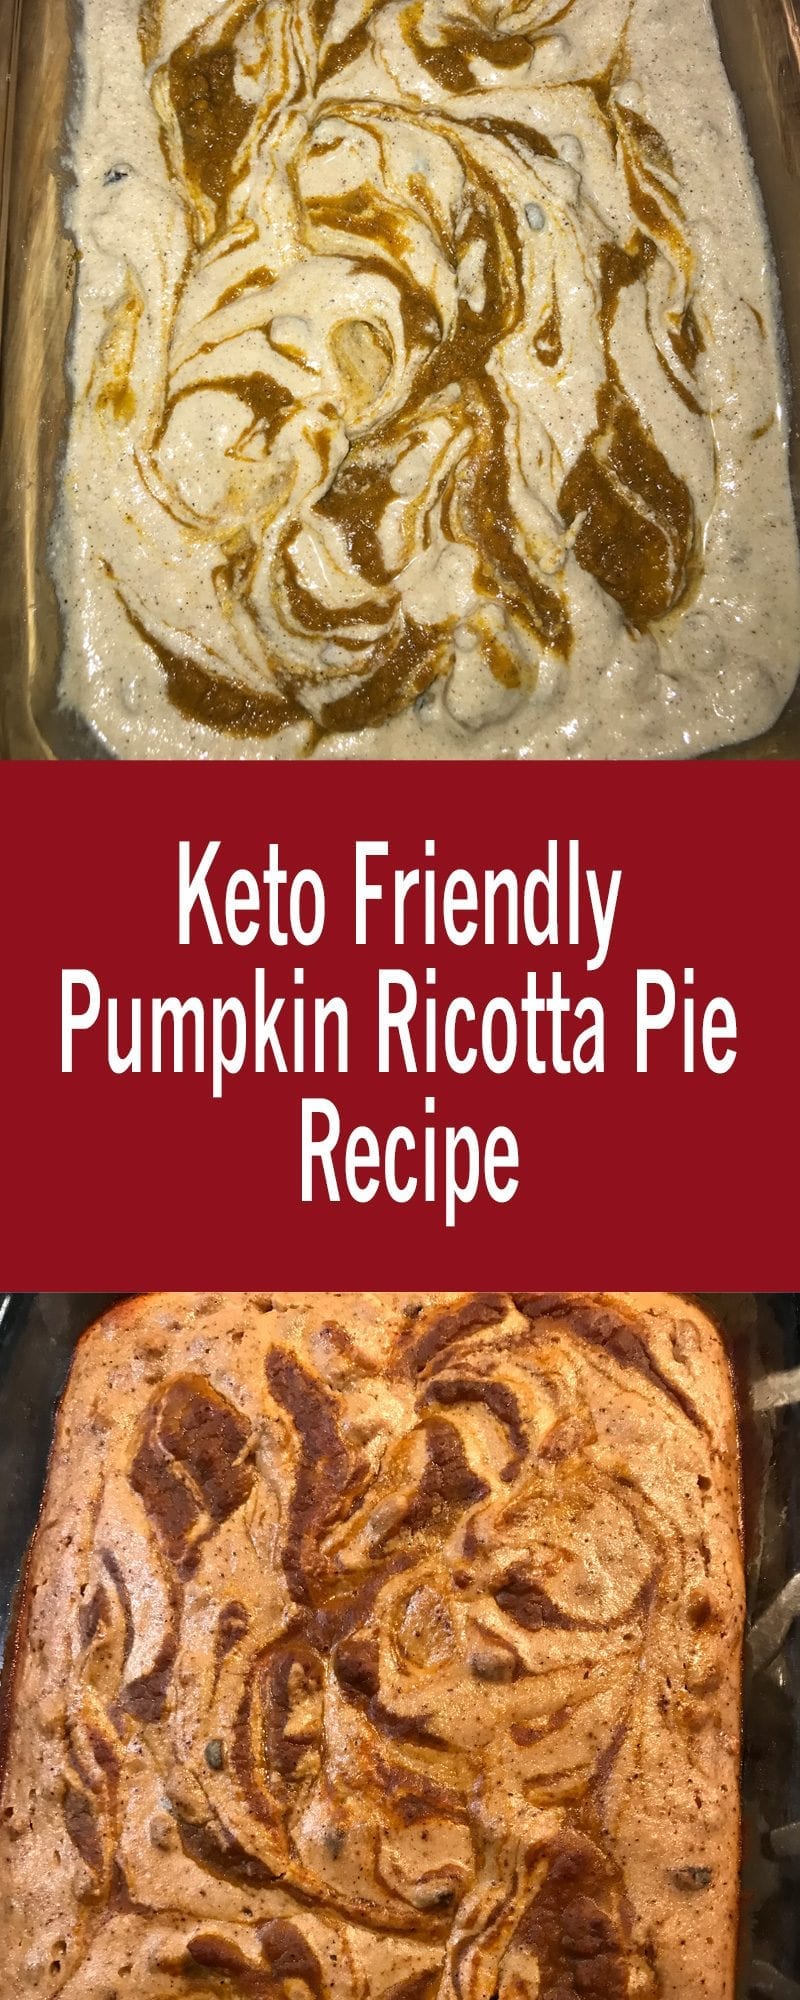 Keto Friendly Pumpkin Ricotta Pie Recipe